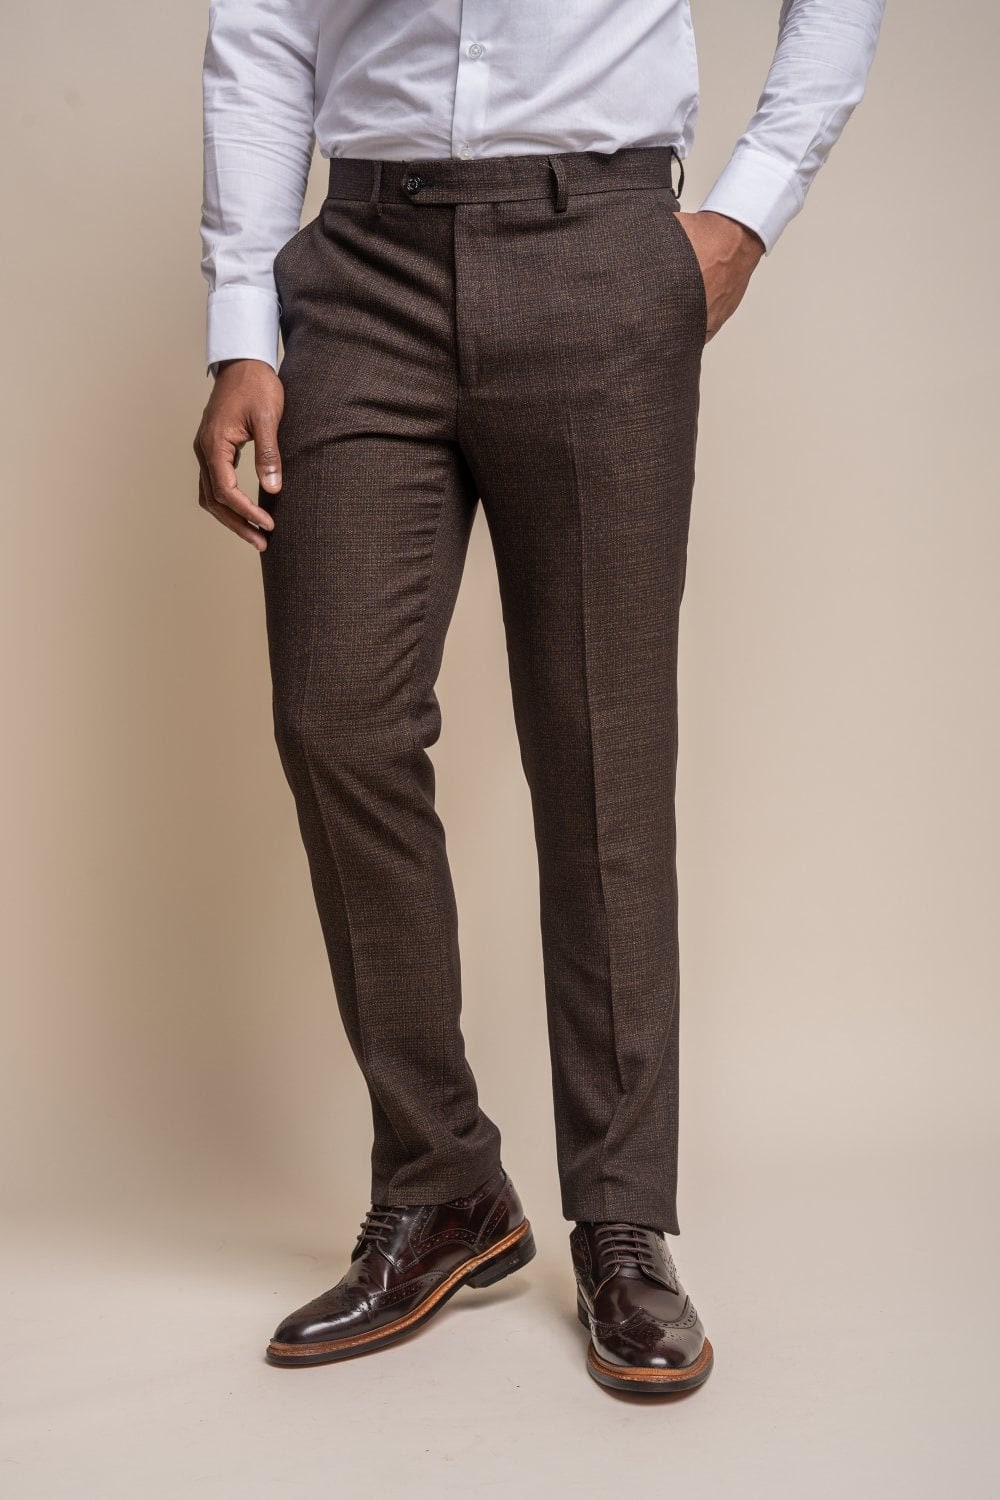 Mens Caridi Brown Lightweight Check Suit Bespoke Premium - Etsy